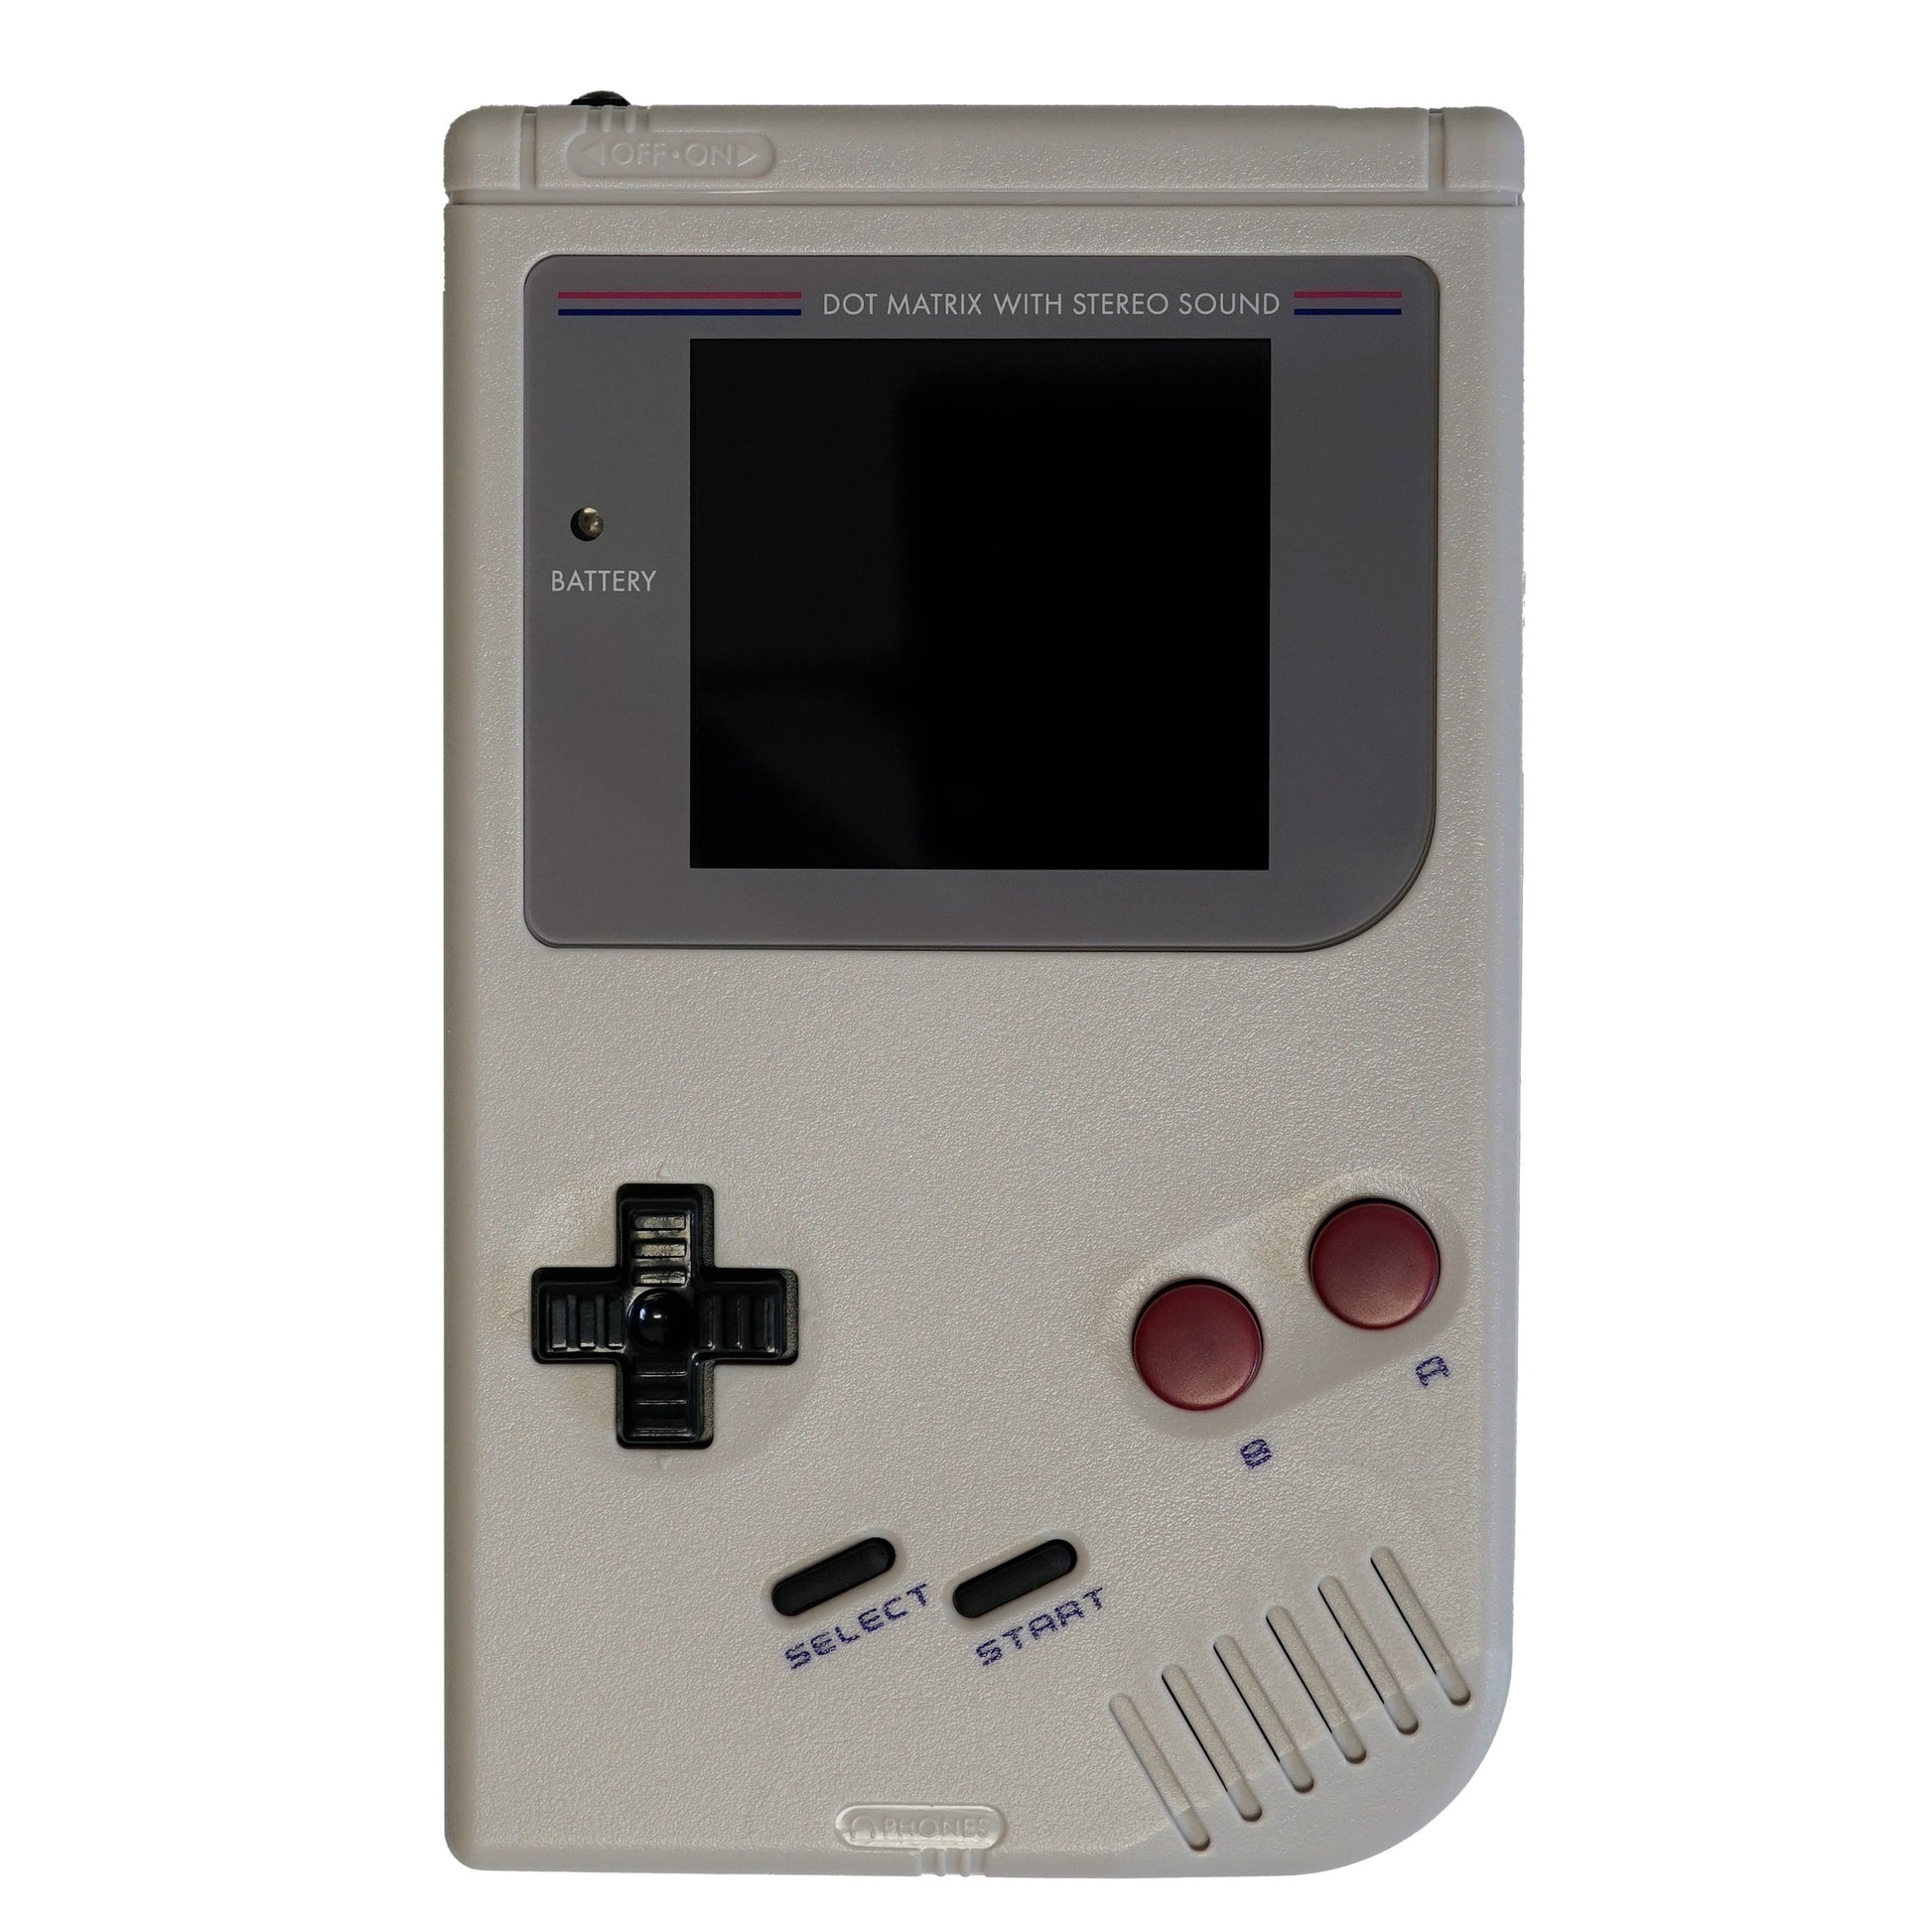 Game Boy Ultimate Console - Original Gray Modding